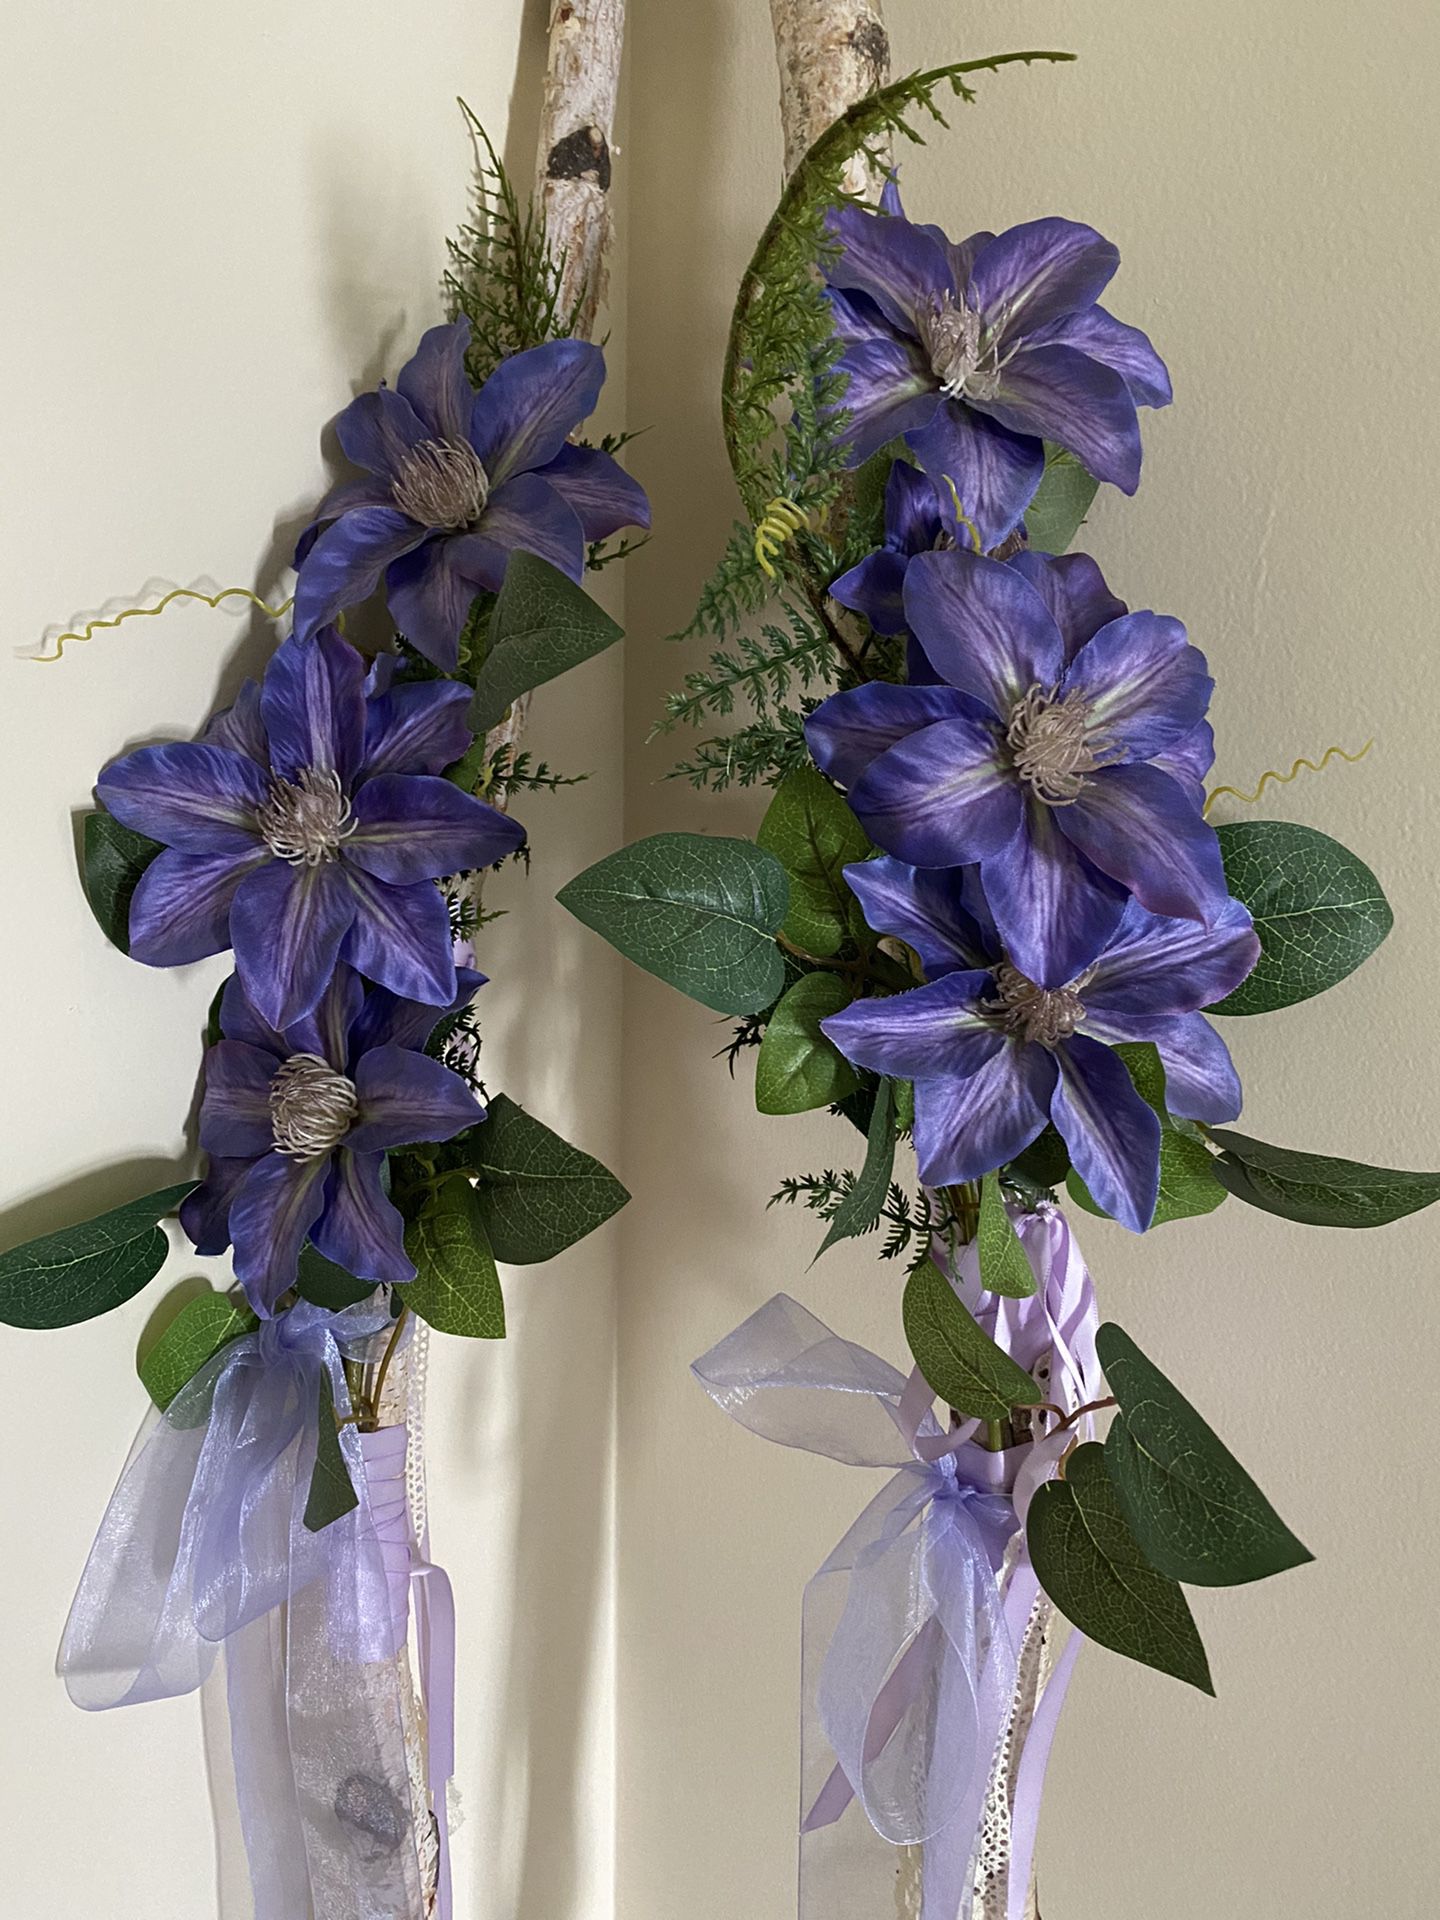 Handmade Wedding Decor - Decorative Birch Posts With Purple Flowers